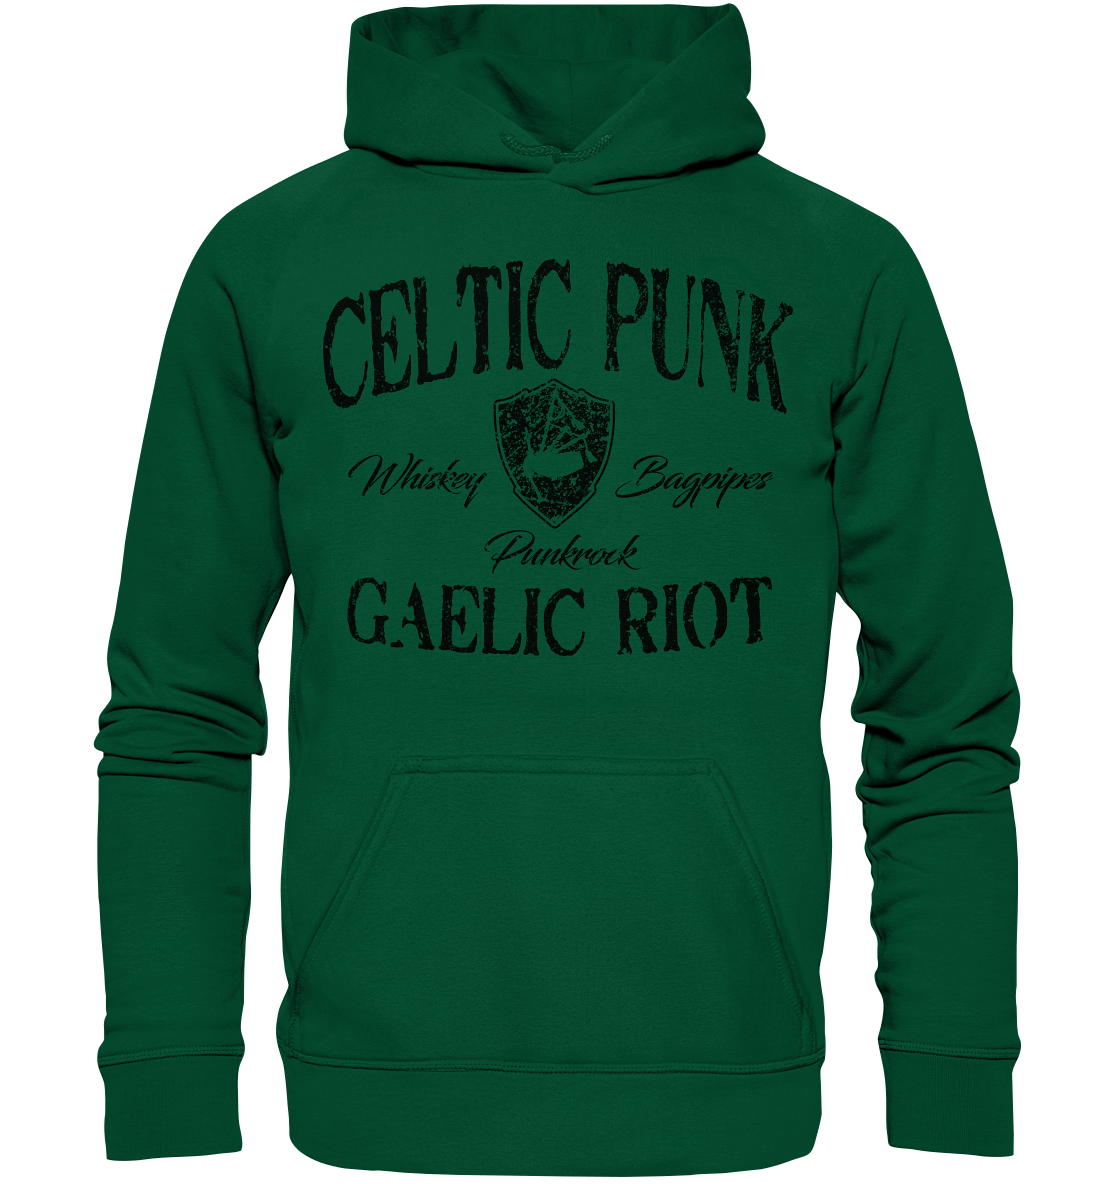 Celtic Punk "Gaelic Riot" - Basic Unisex Hoodie